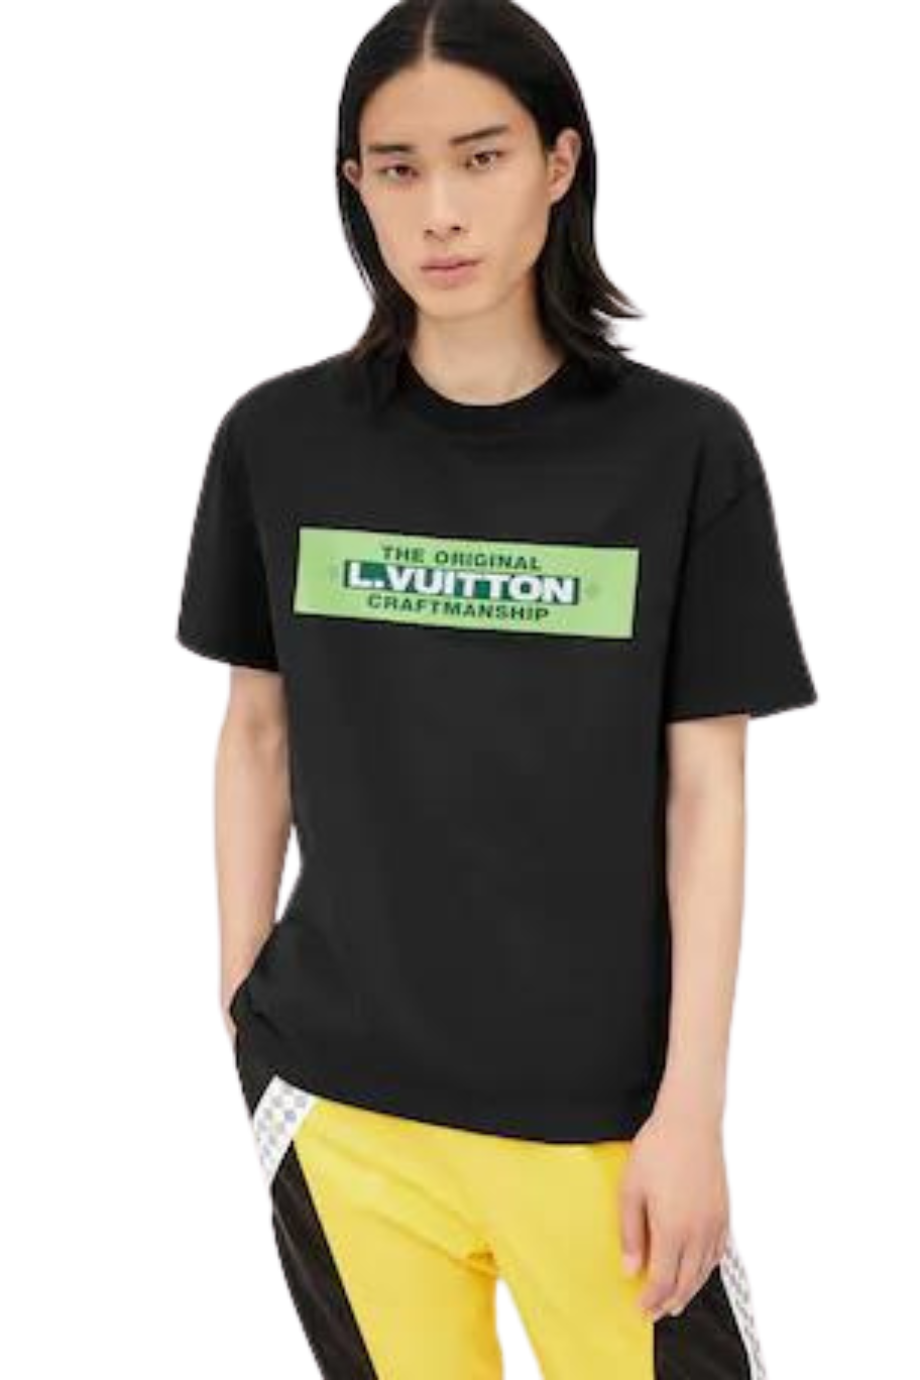 LOUIS VUITTON CRAFTMAN SHIP Tシャツ - トップス